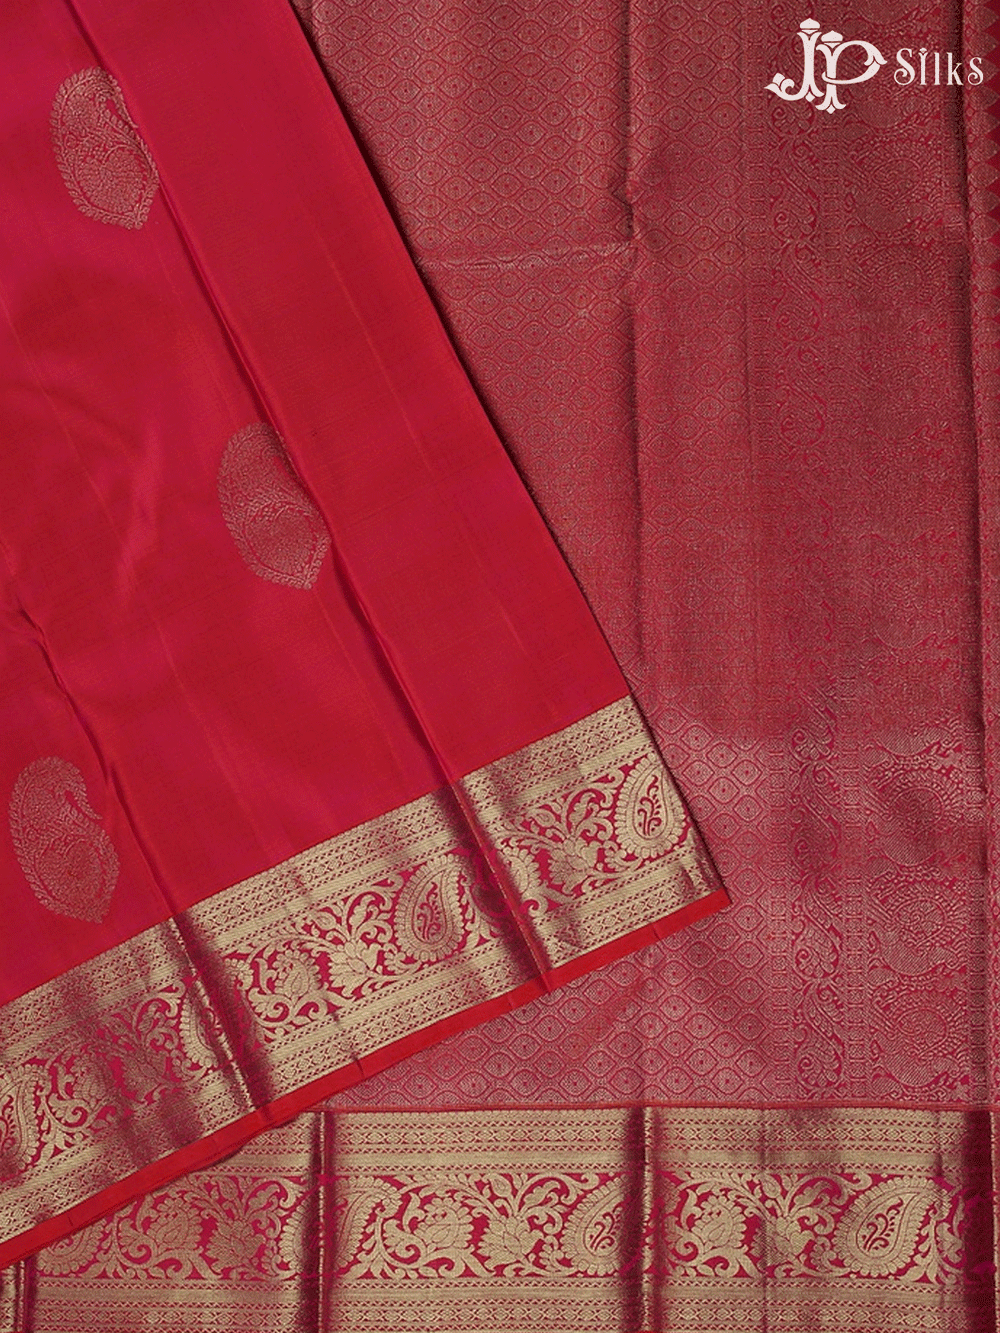 Pinkish Red Paisley Motif Kanchipuram Silk Saree - A1328 - View 1